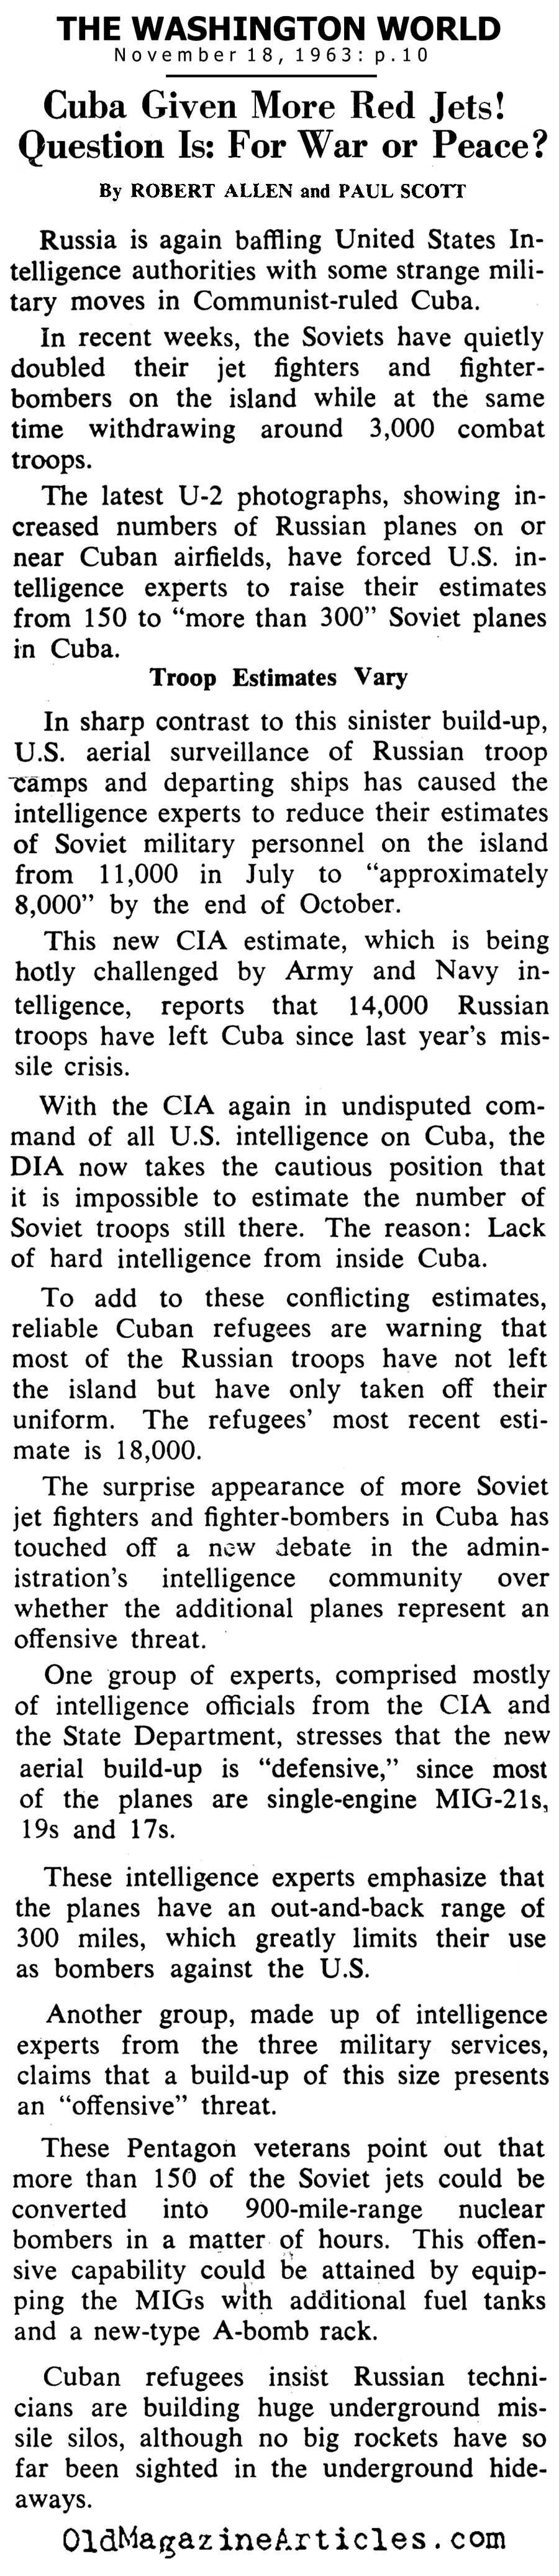 More MIGS for Cuba (The Washington World, 1963)